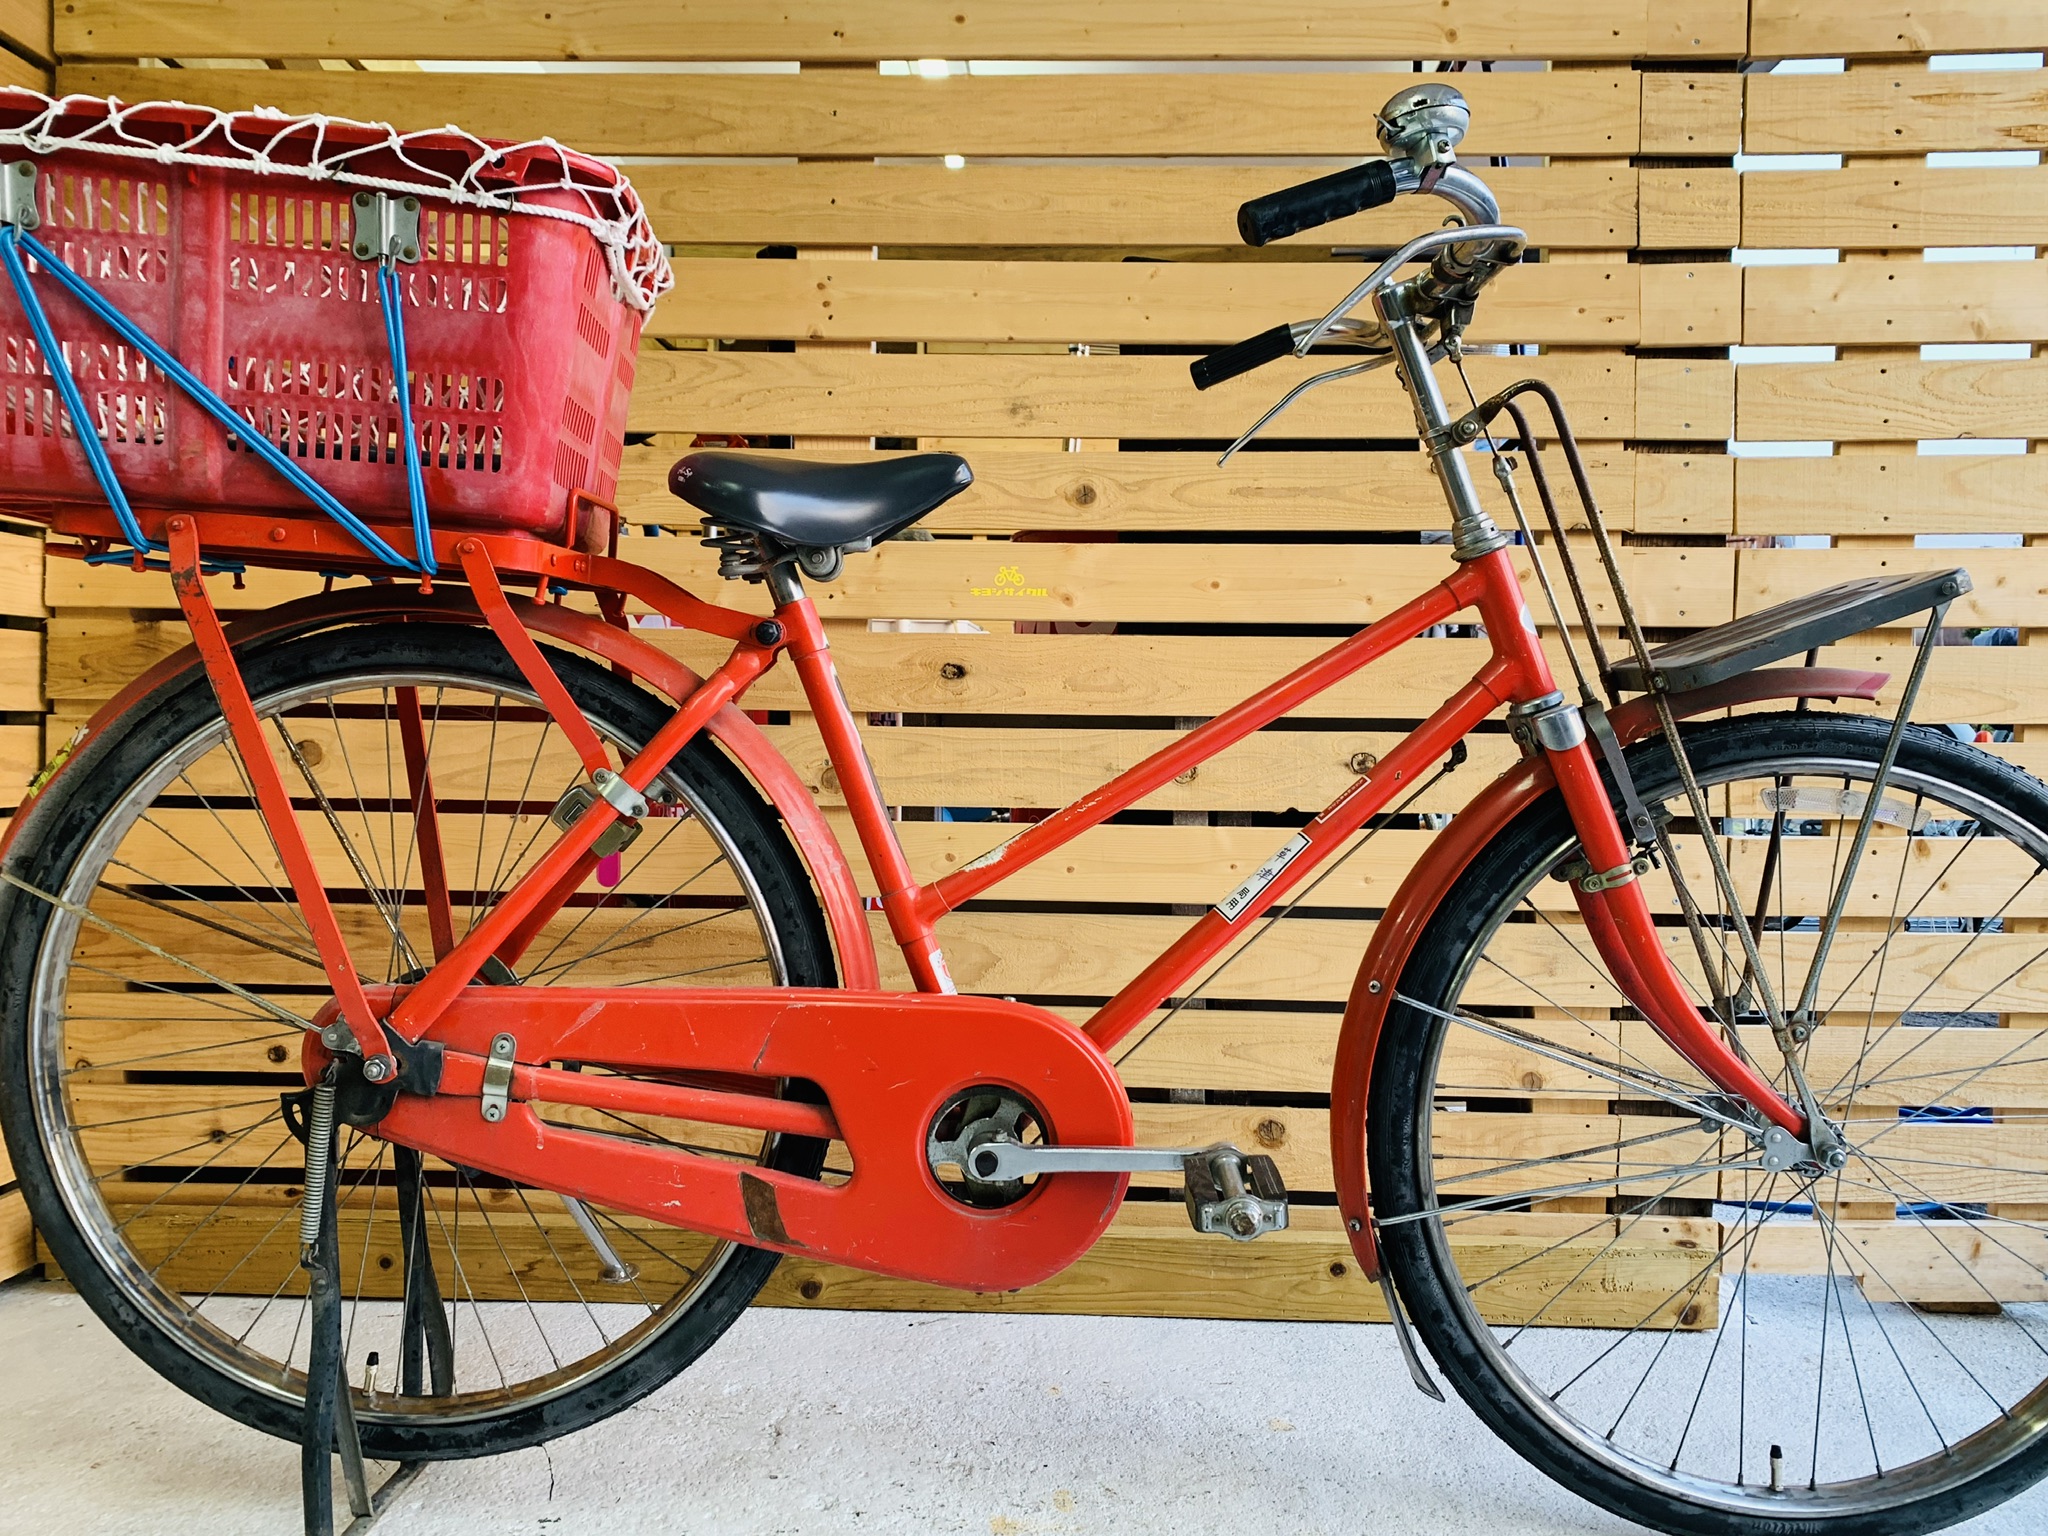 実用車 運搬車 郵政 郵便 自転車 赤 チャリ - 広島県の自転車